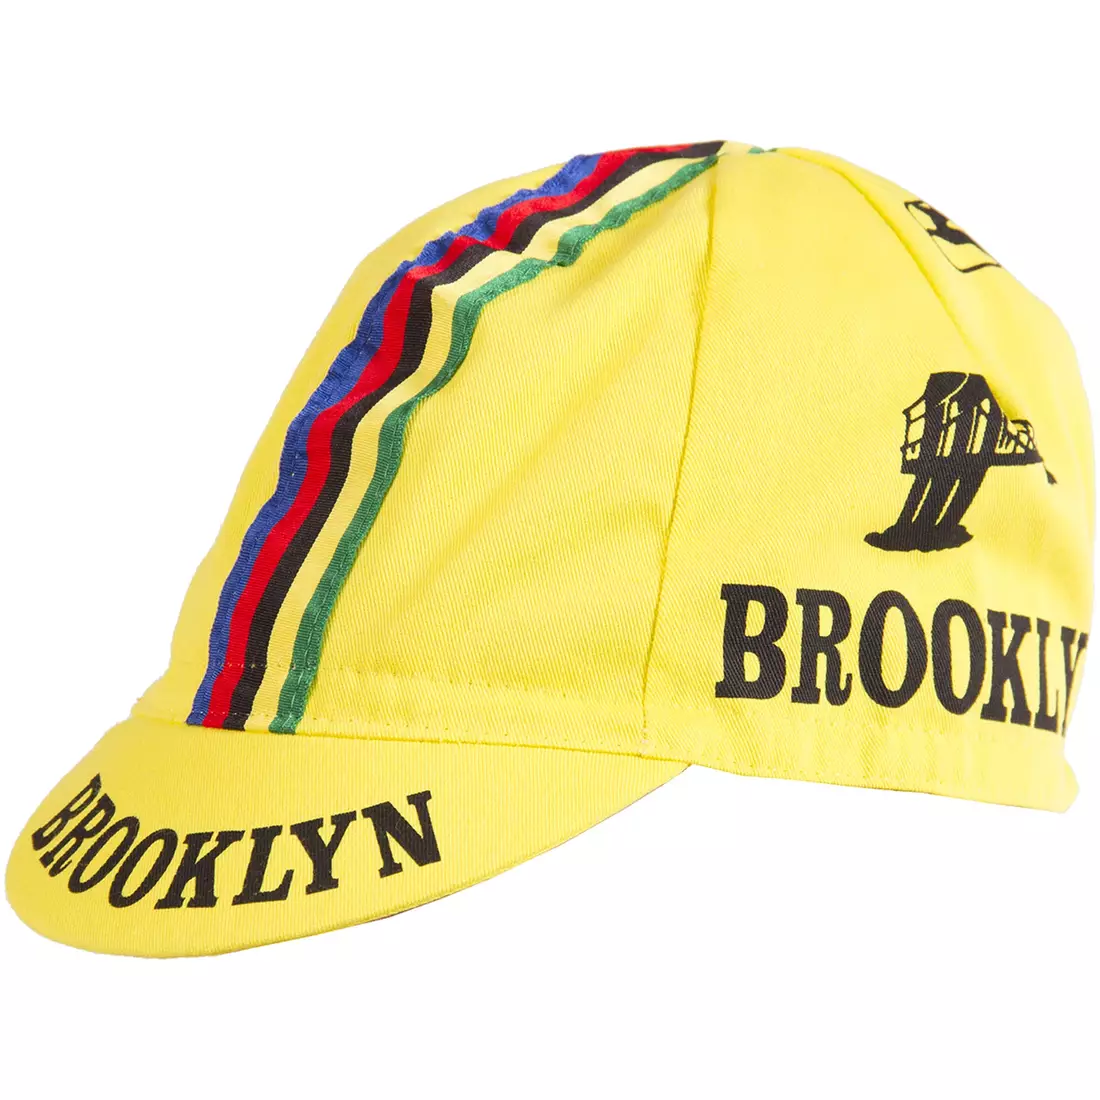 GIORDANA SS18 cycling cap - Brooklyn - Yellow w/ Stripe tape GI-S6-COCA-BROK-YELL one size